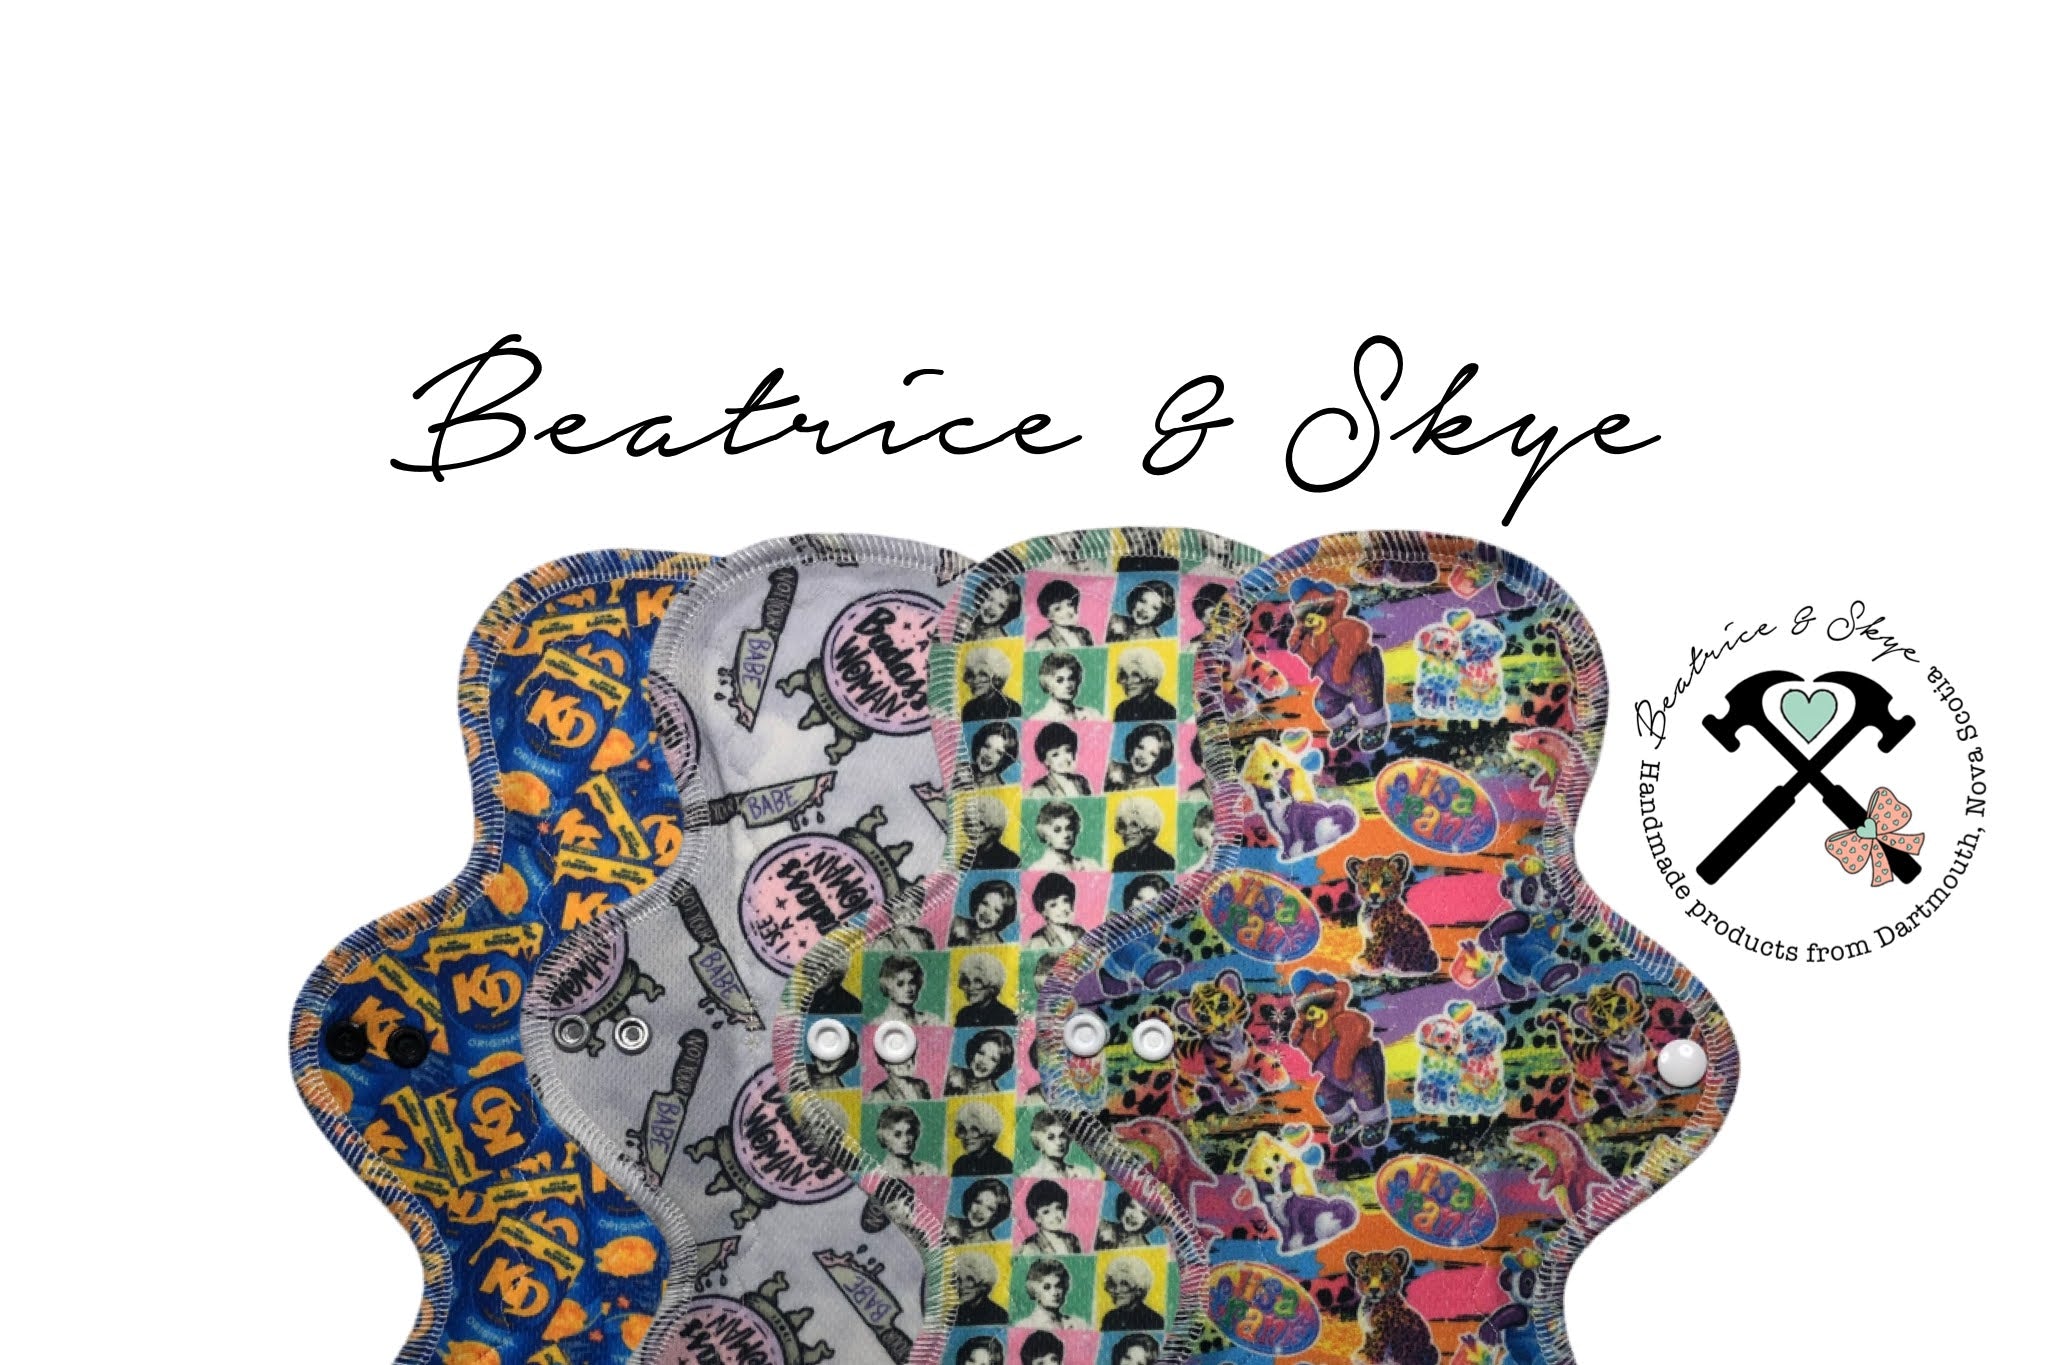 Beatrice and Skye